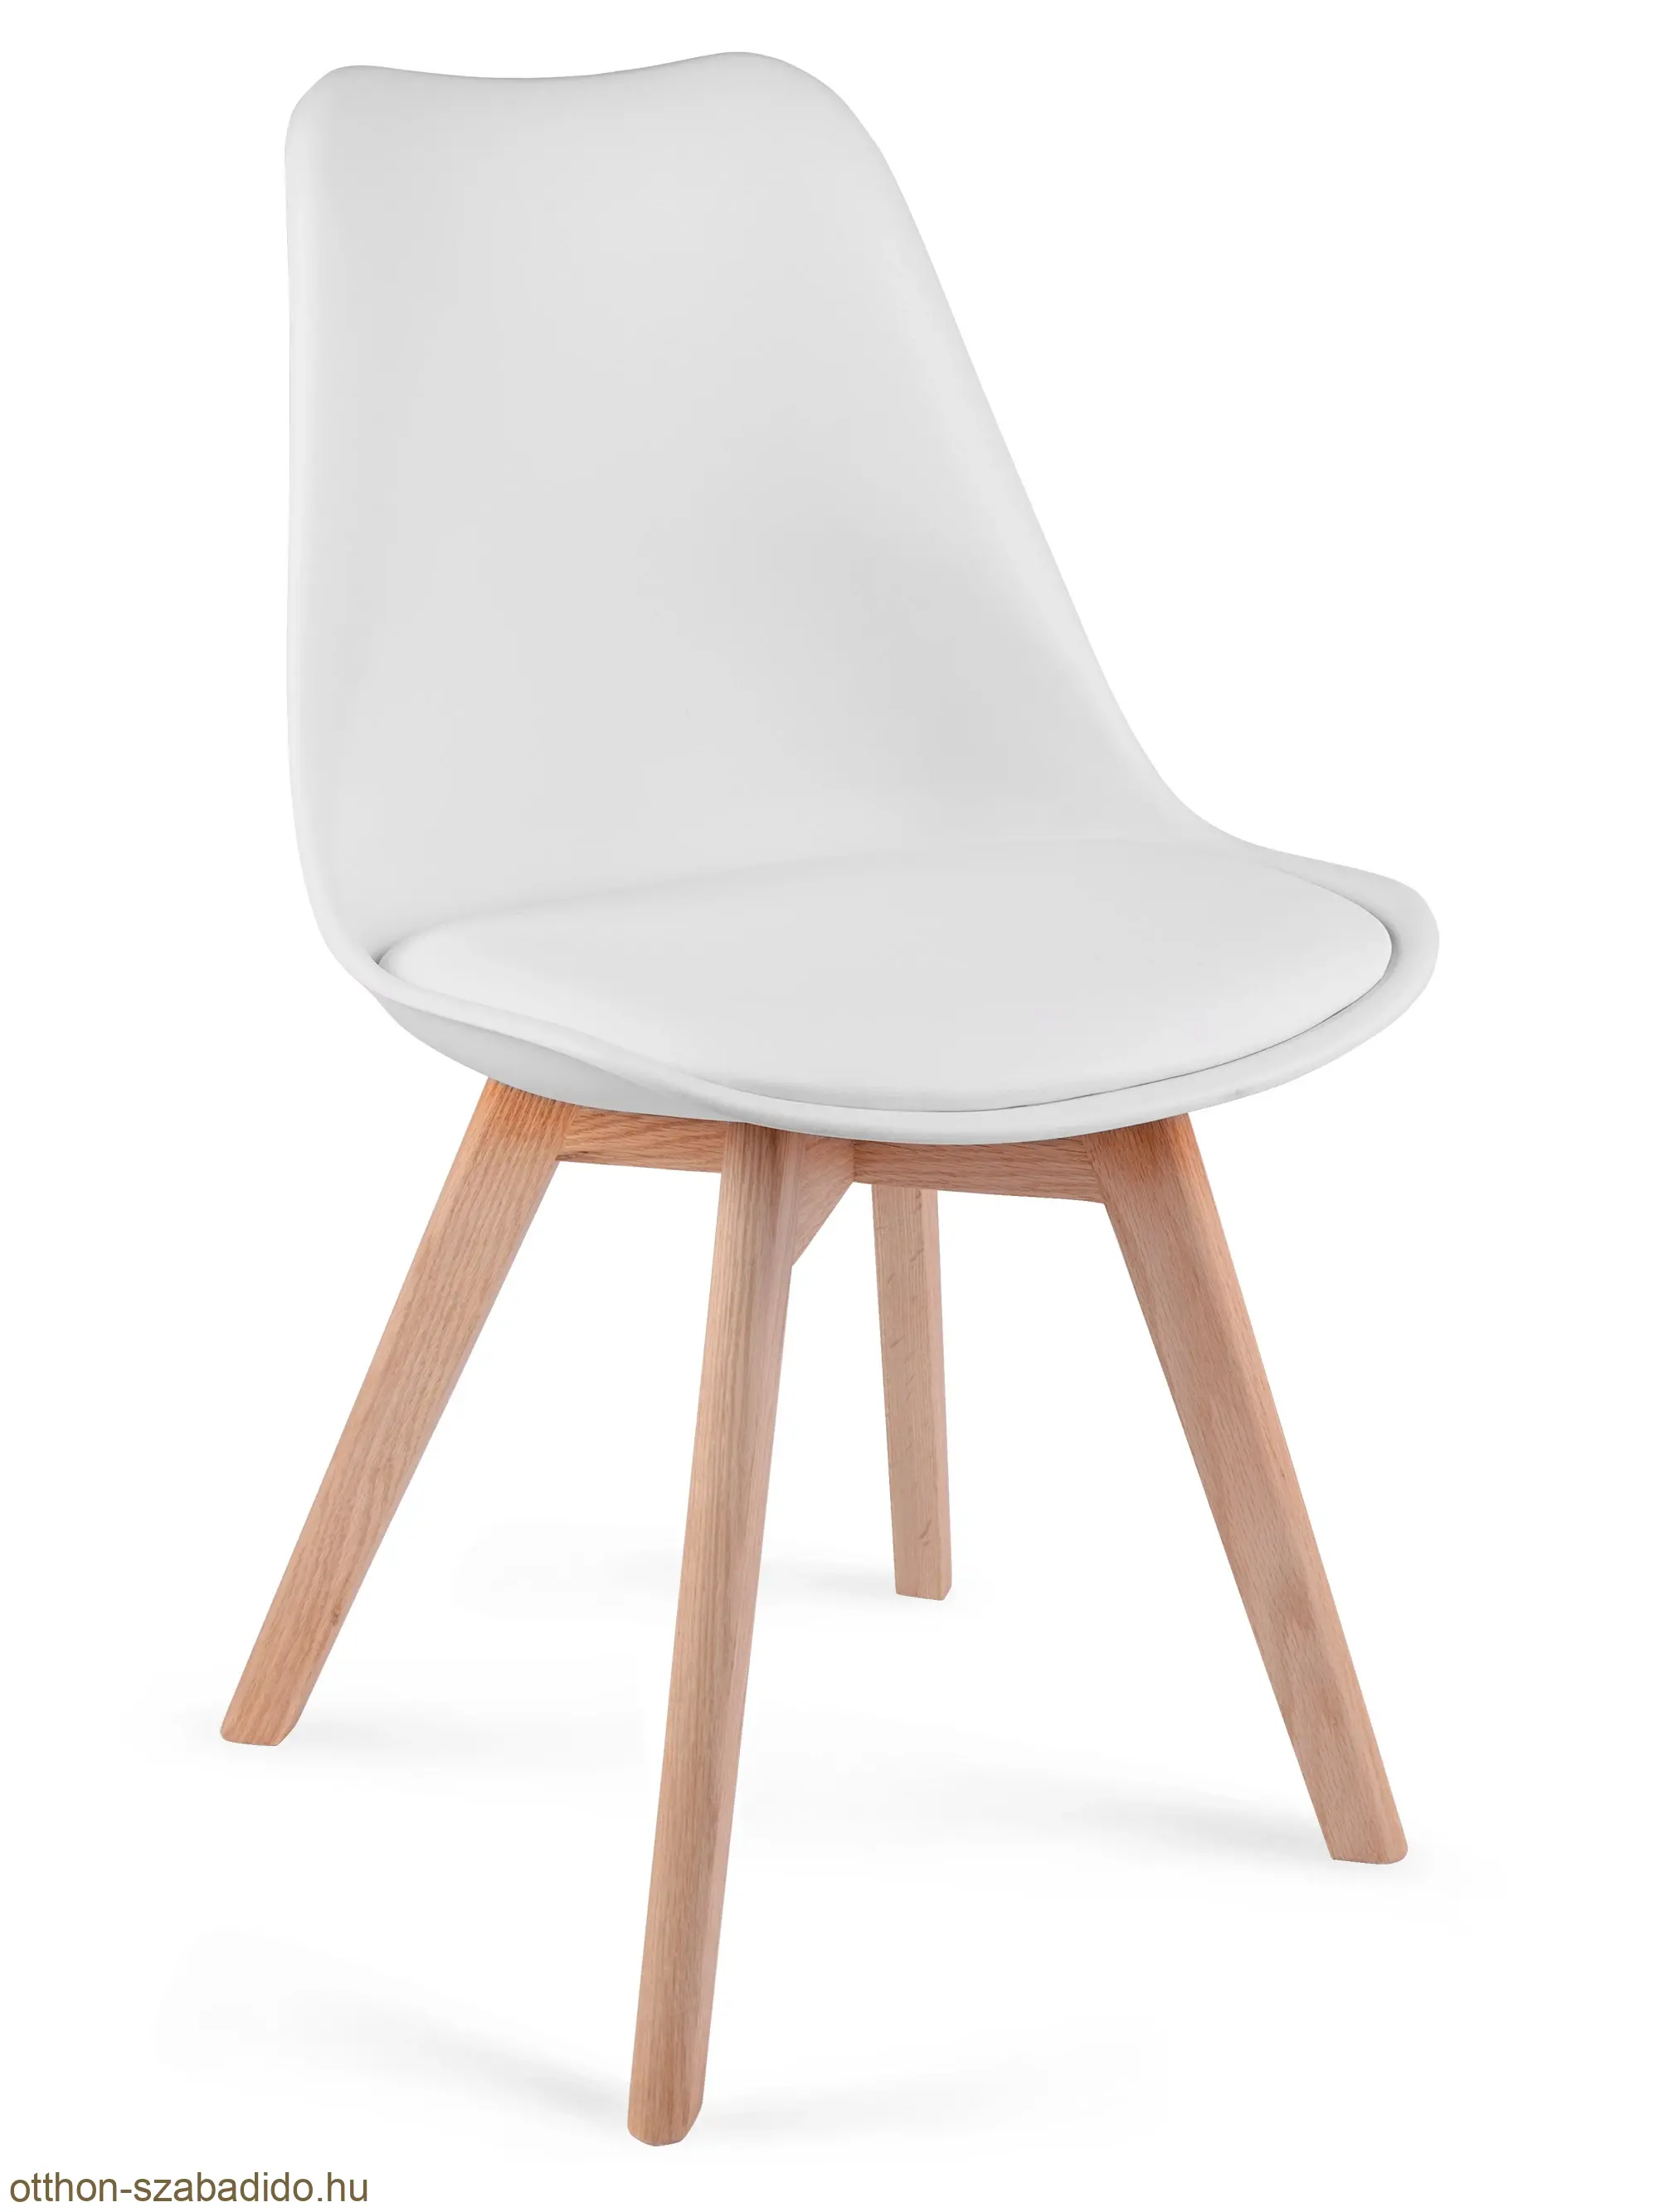 SOFOTEL modern skandináv stílusú műbőr szék, Ponti fehér